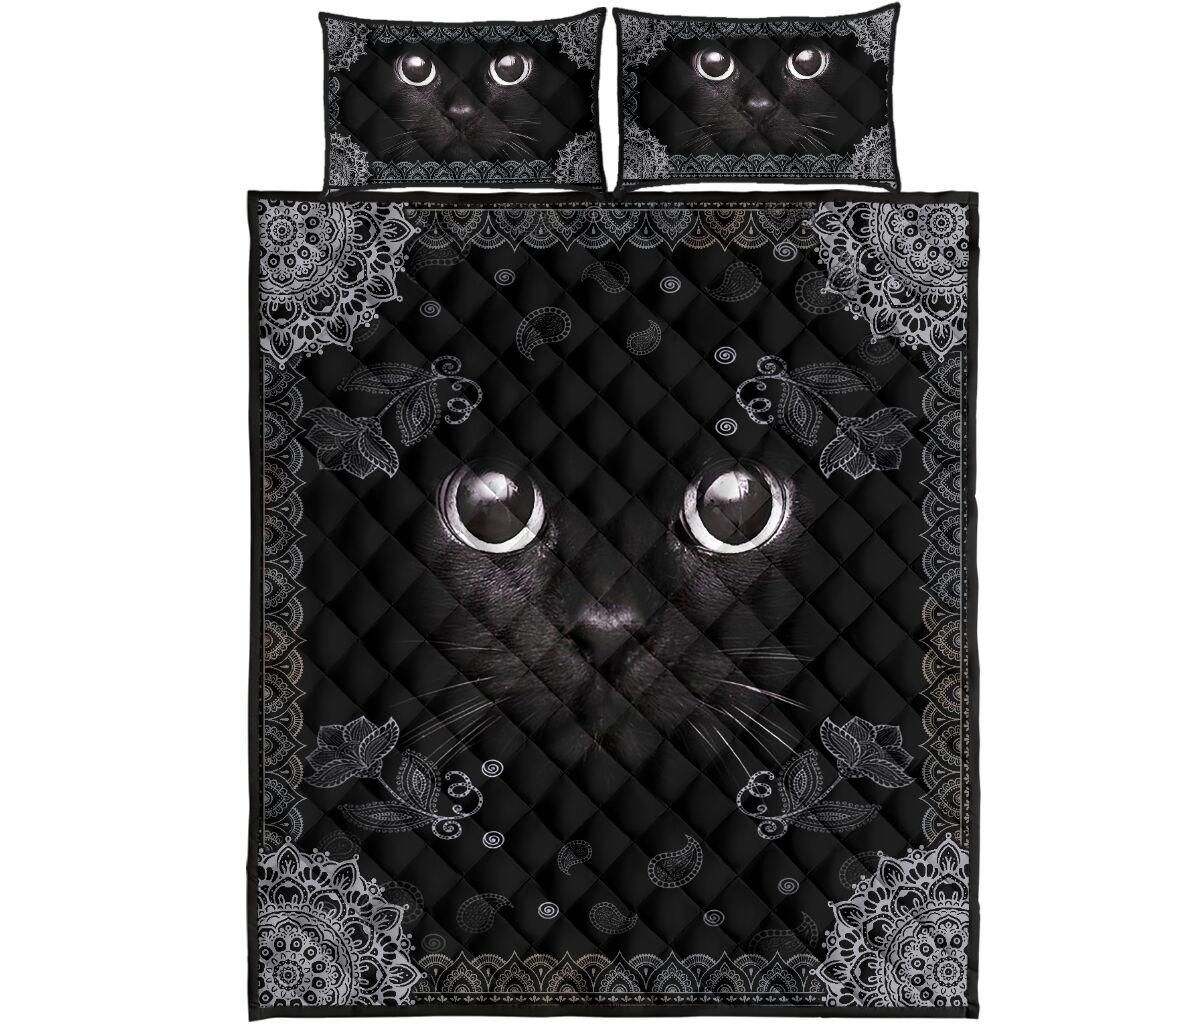 Black Cat Quilt Bedding Set by SUN SU050601